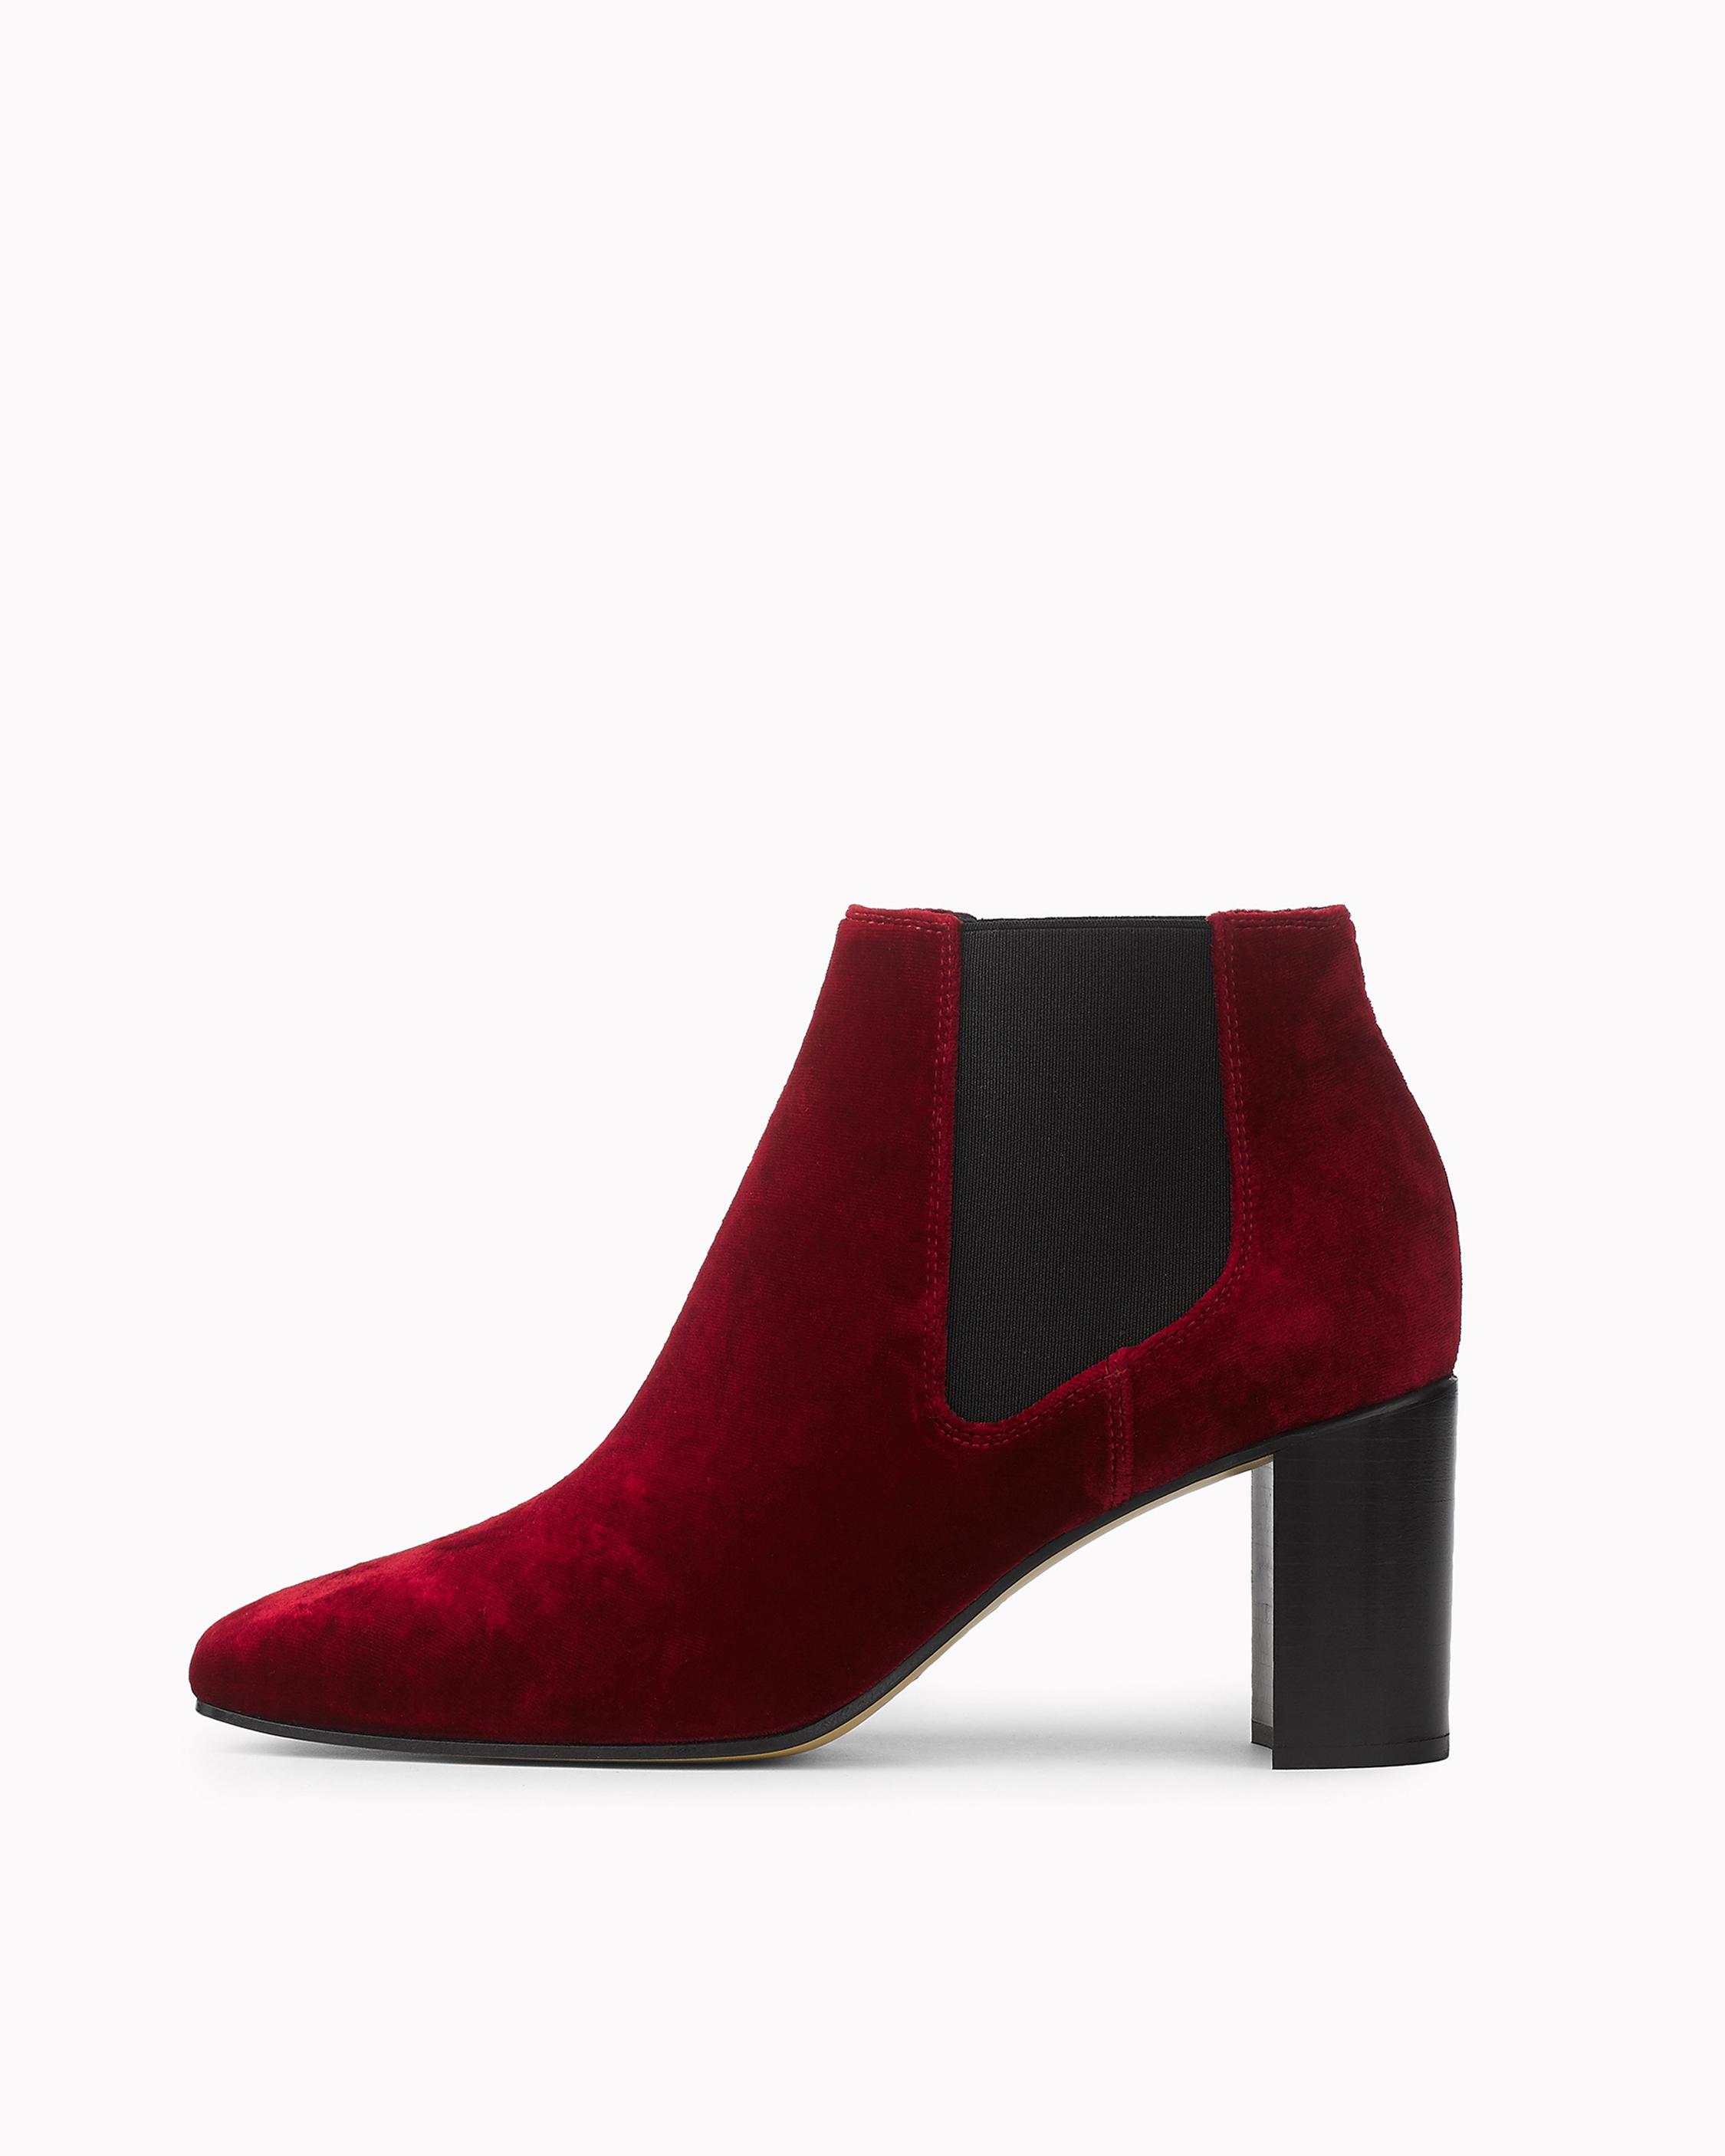 Boots & Booties: Velvet & Ankle Cut to Suede & Block Heel in Iconic ...